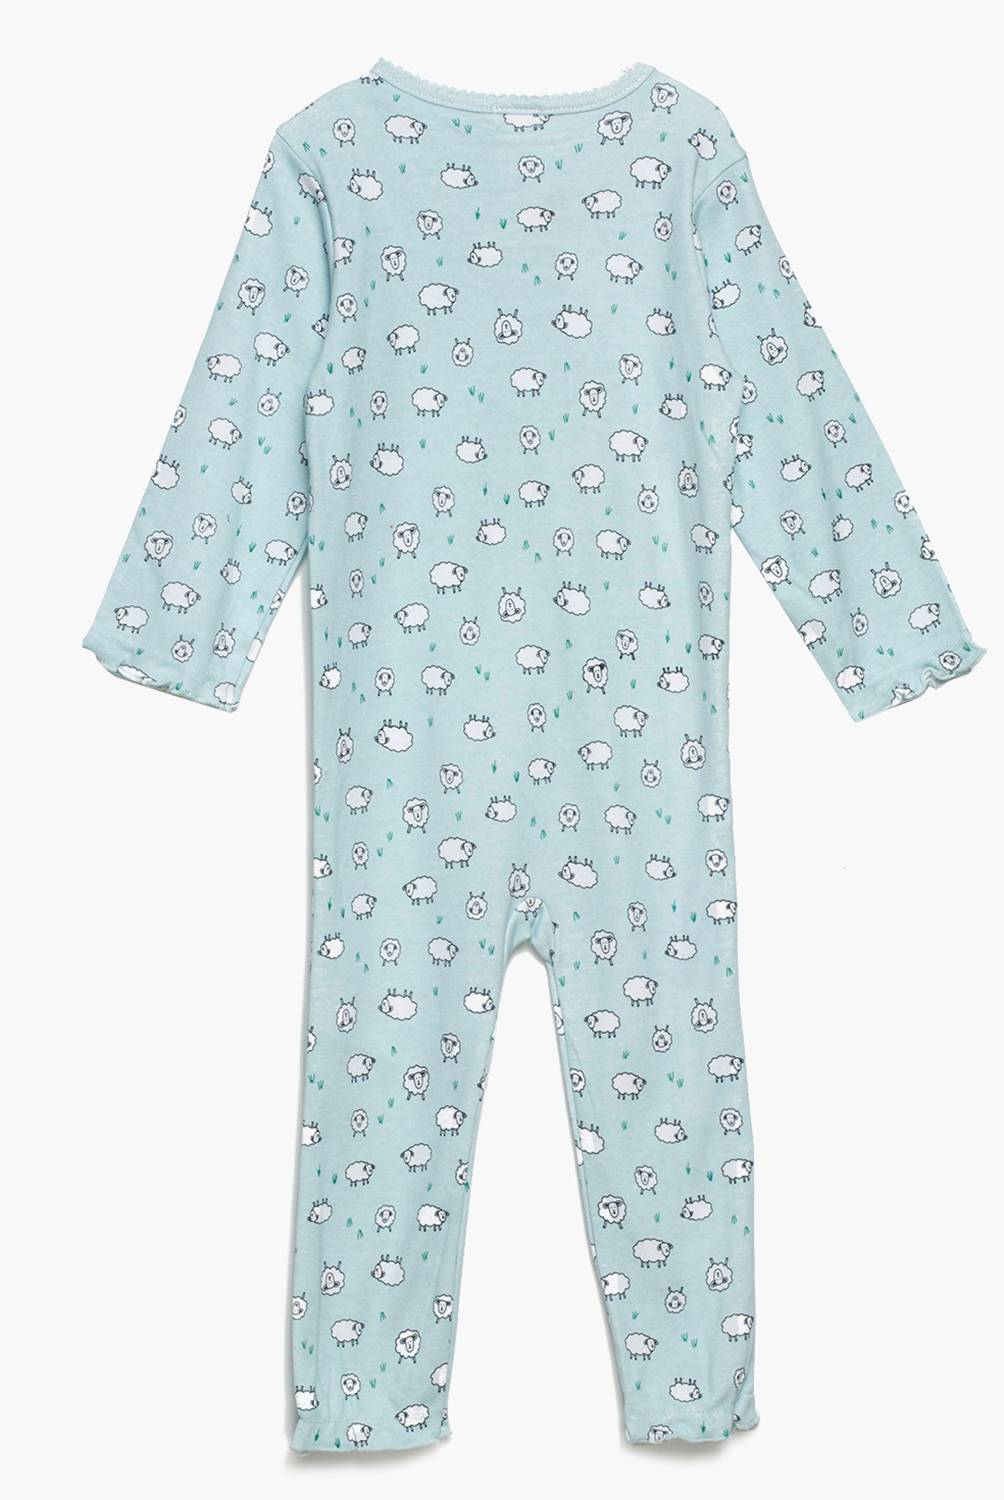 YAMP - Pijama Algodón Bebé Niña